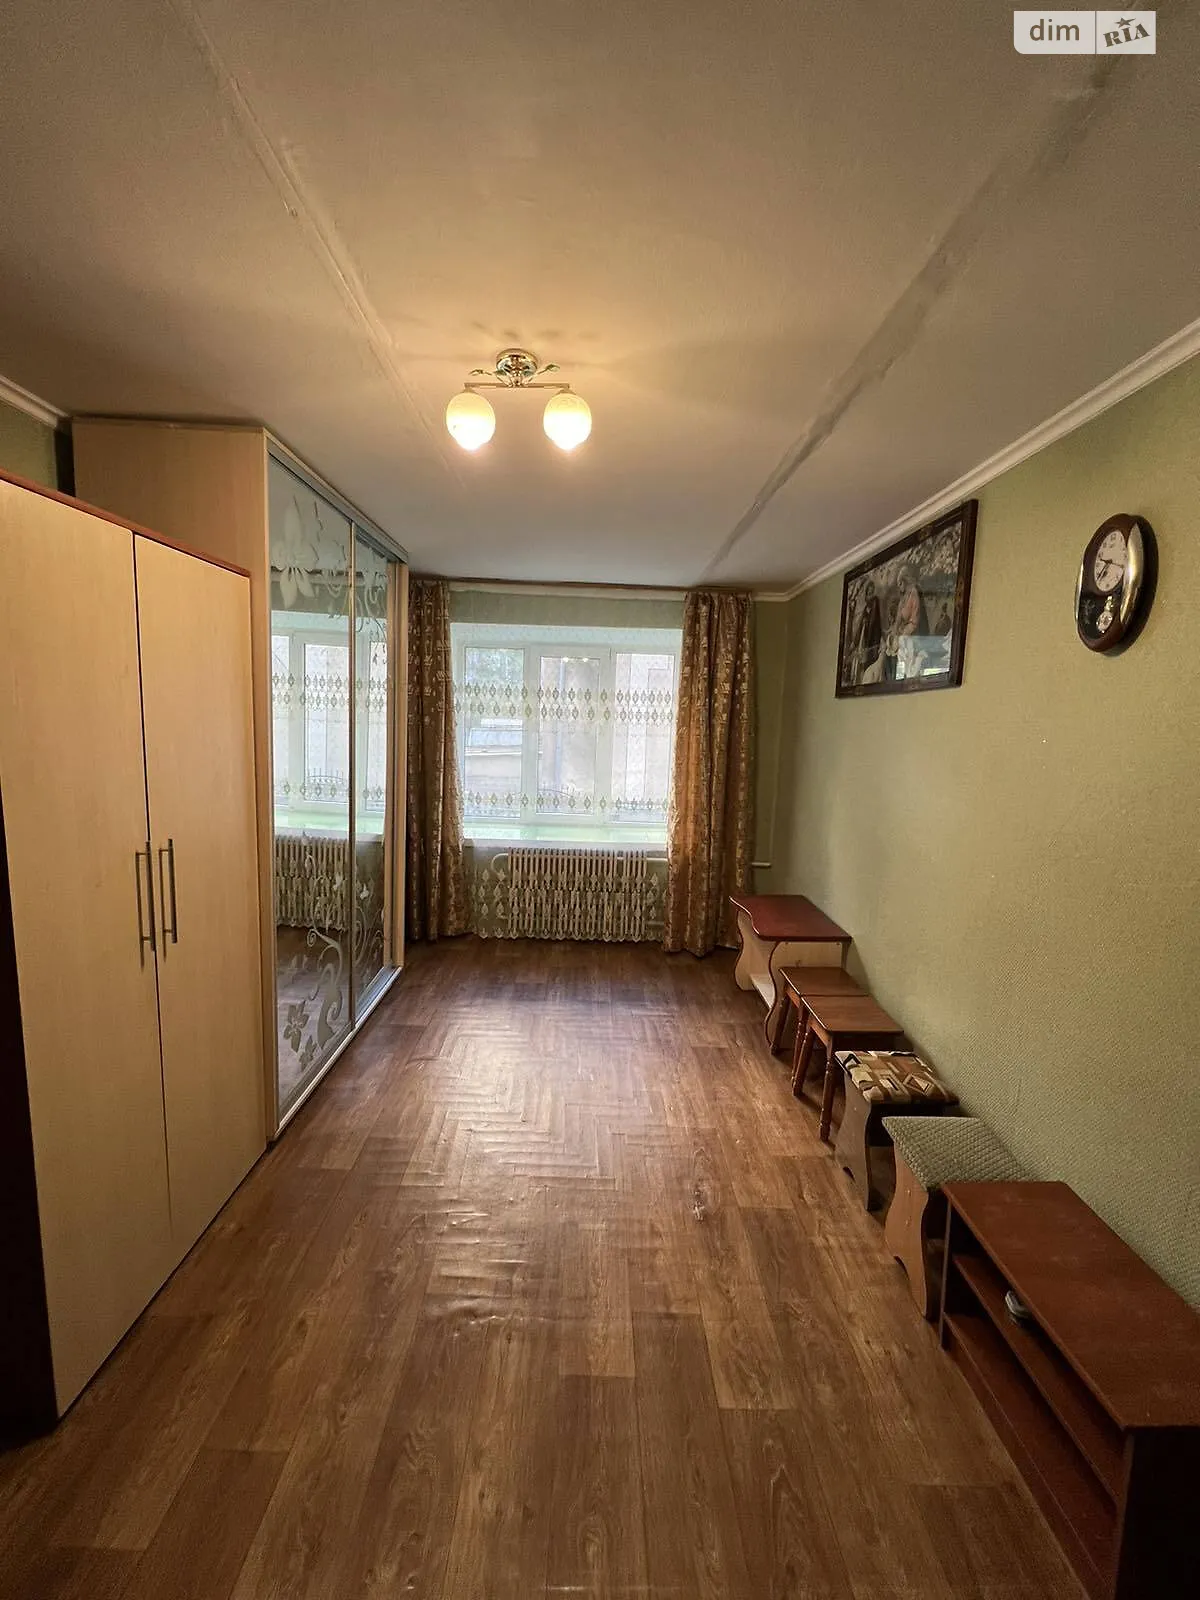 Продается комната 16.6 кв. м в Тернополе, цена: 9000 $